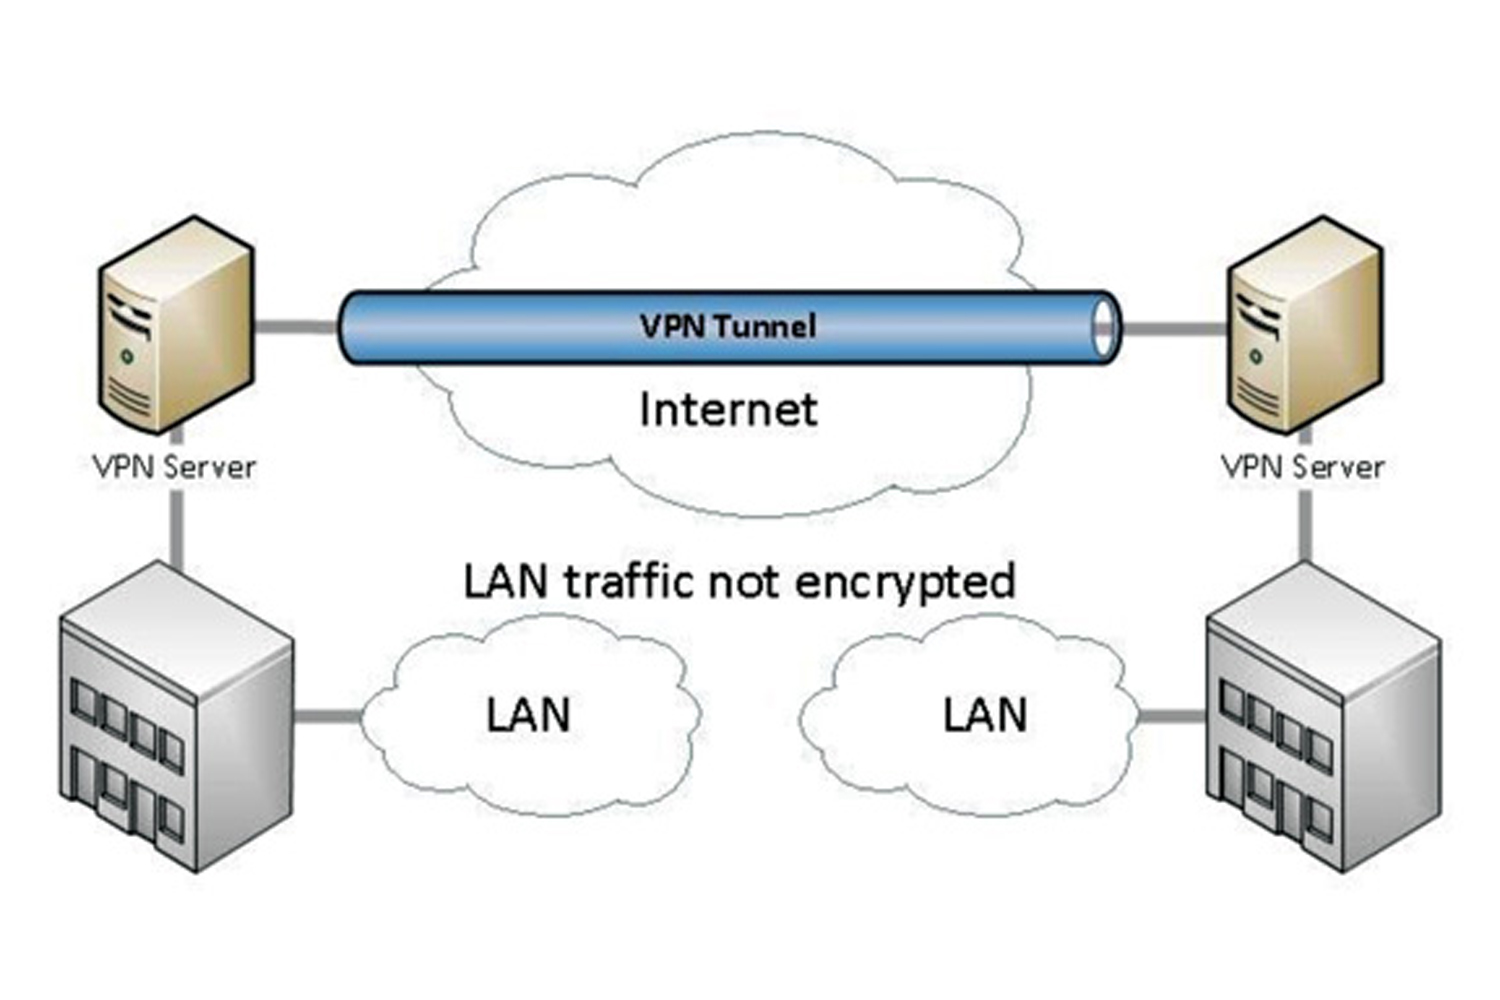 Vpn hosting. Схема VPN туннеля. VPN схема подключения. Схема VPN канала сервер-сервер. Туннелирование впн.